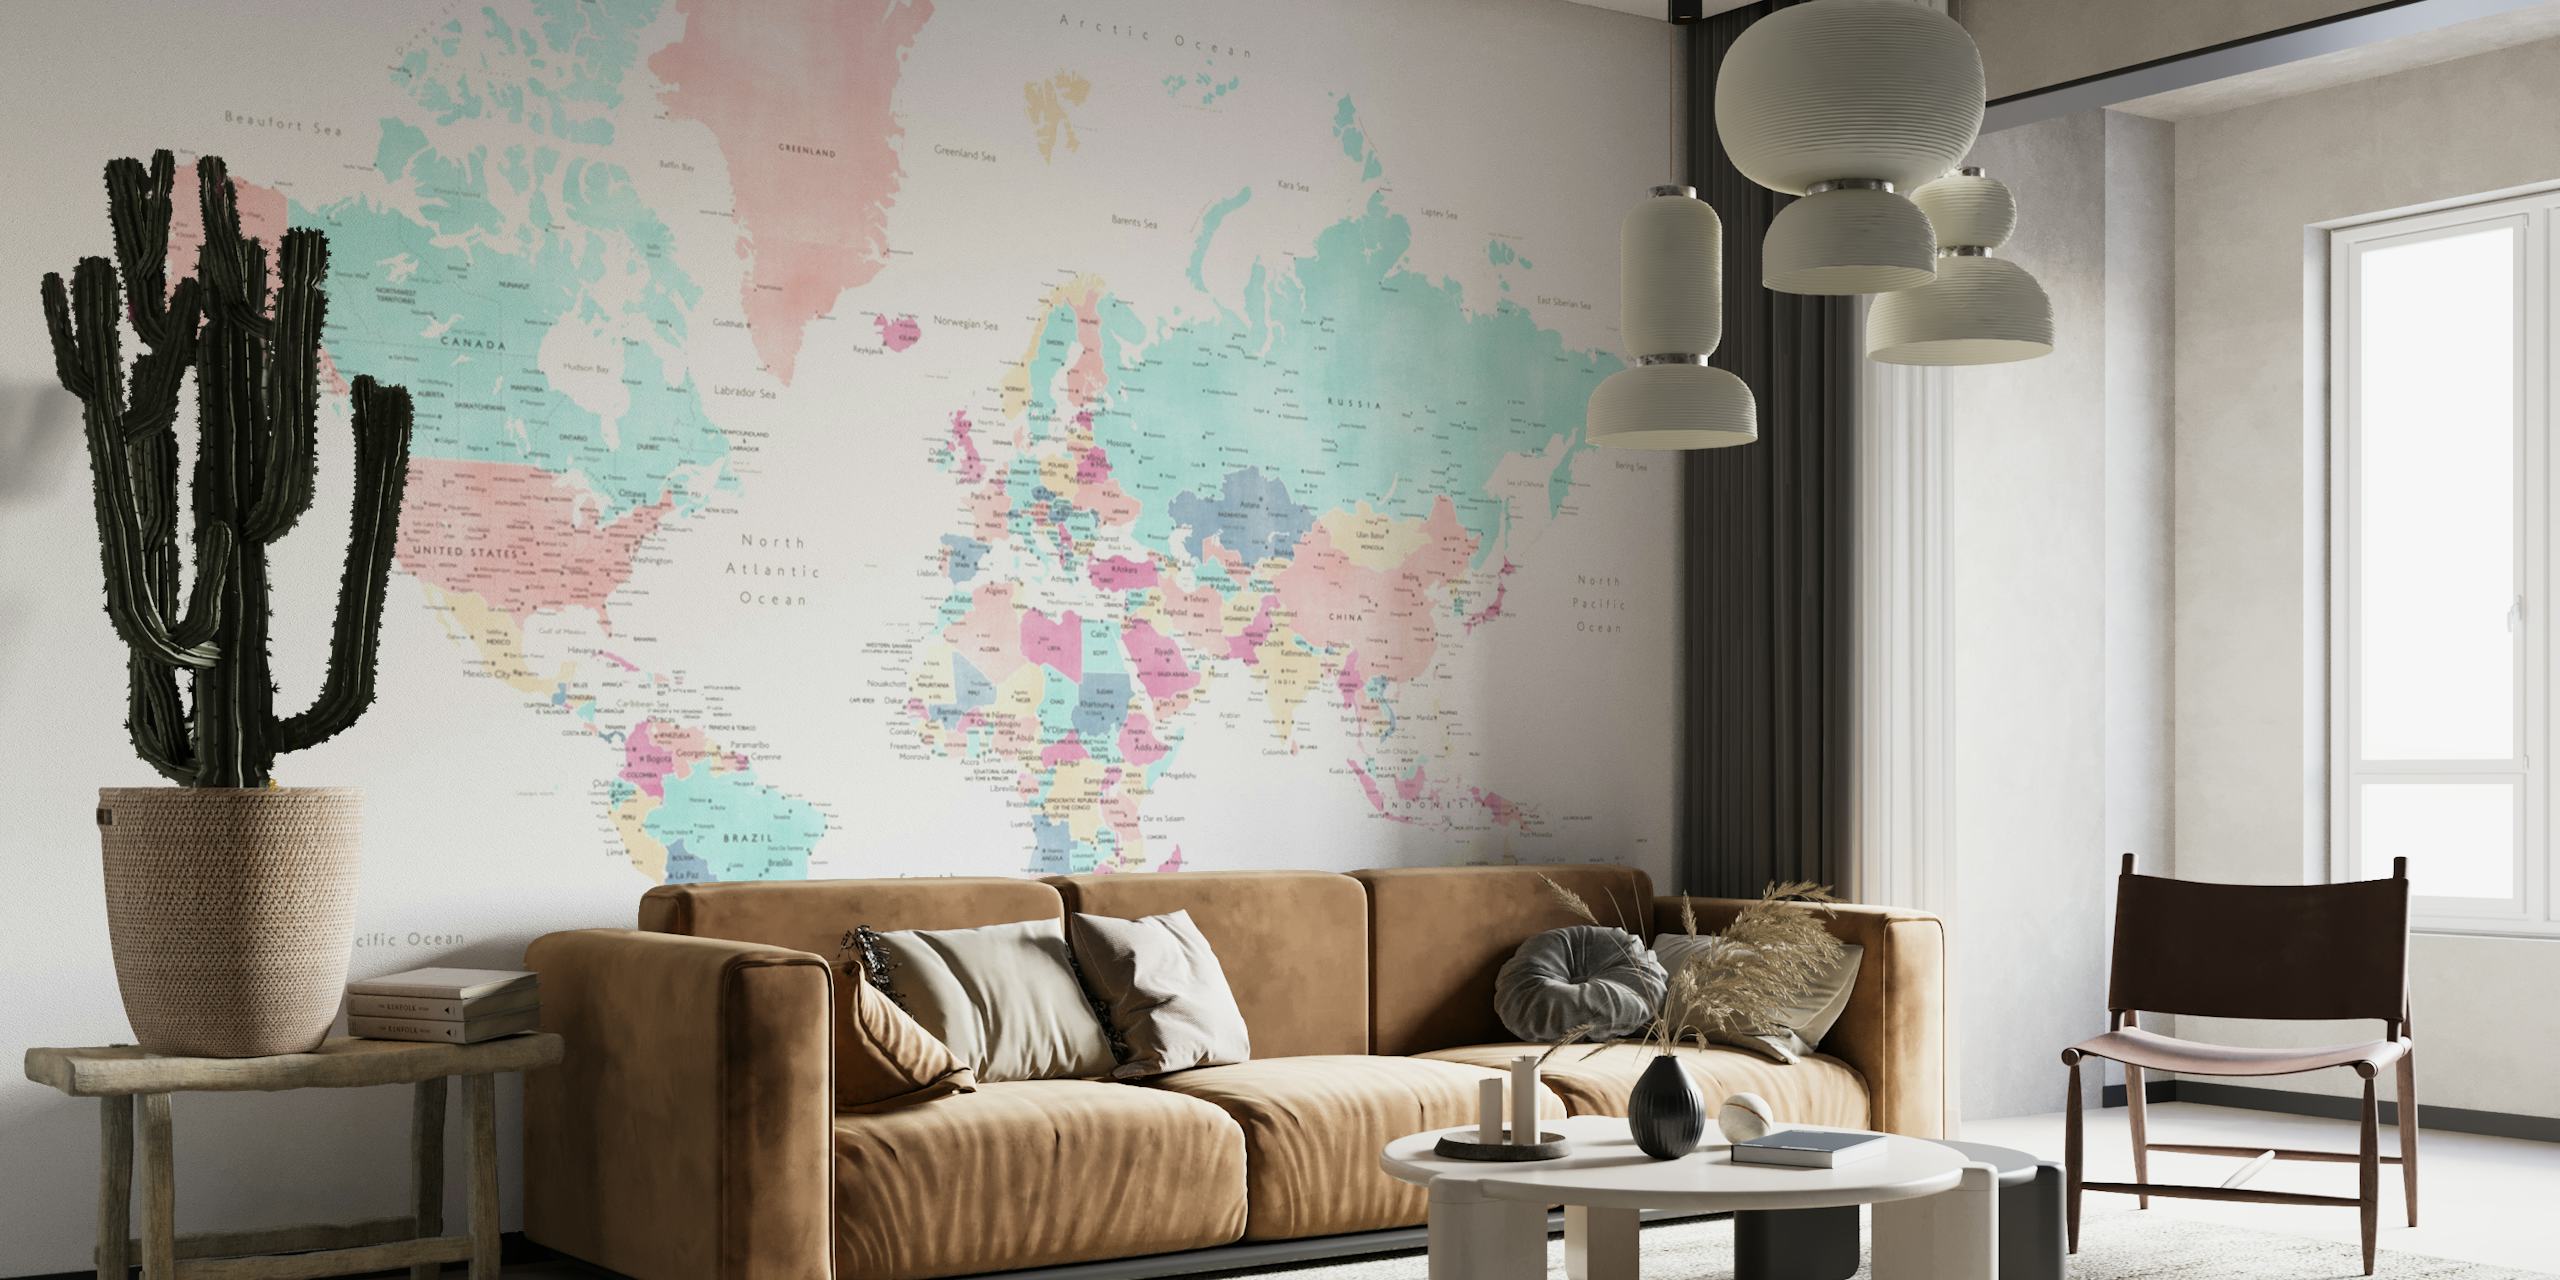 World map with cities Carmen behang